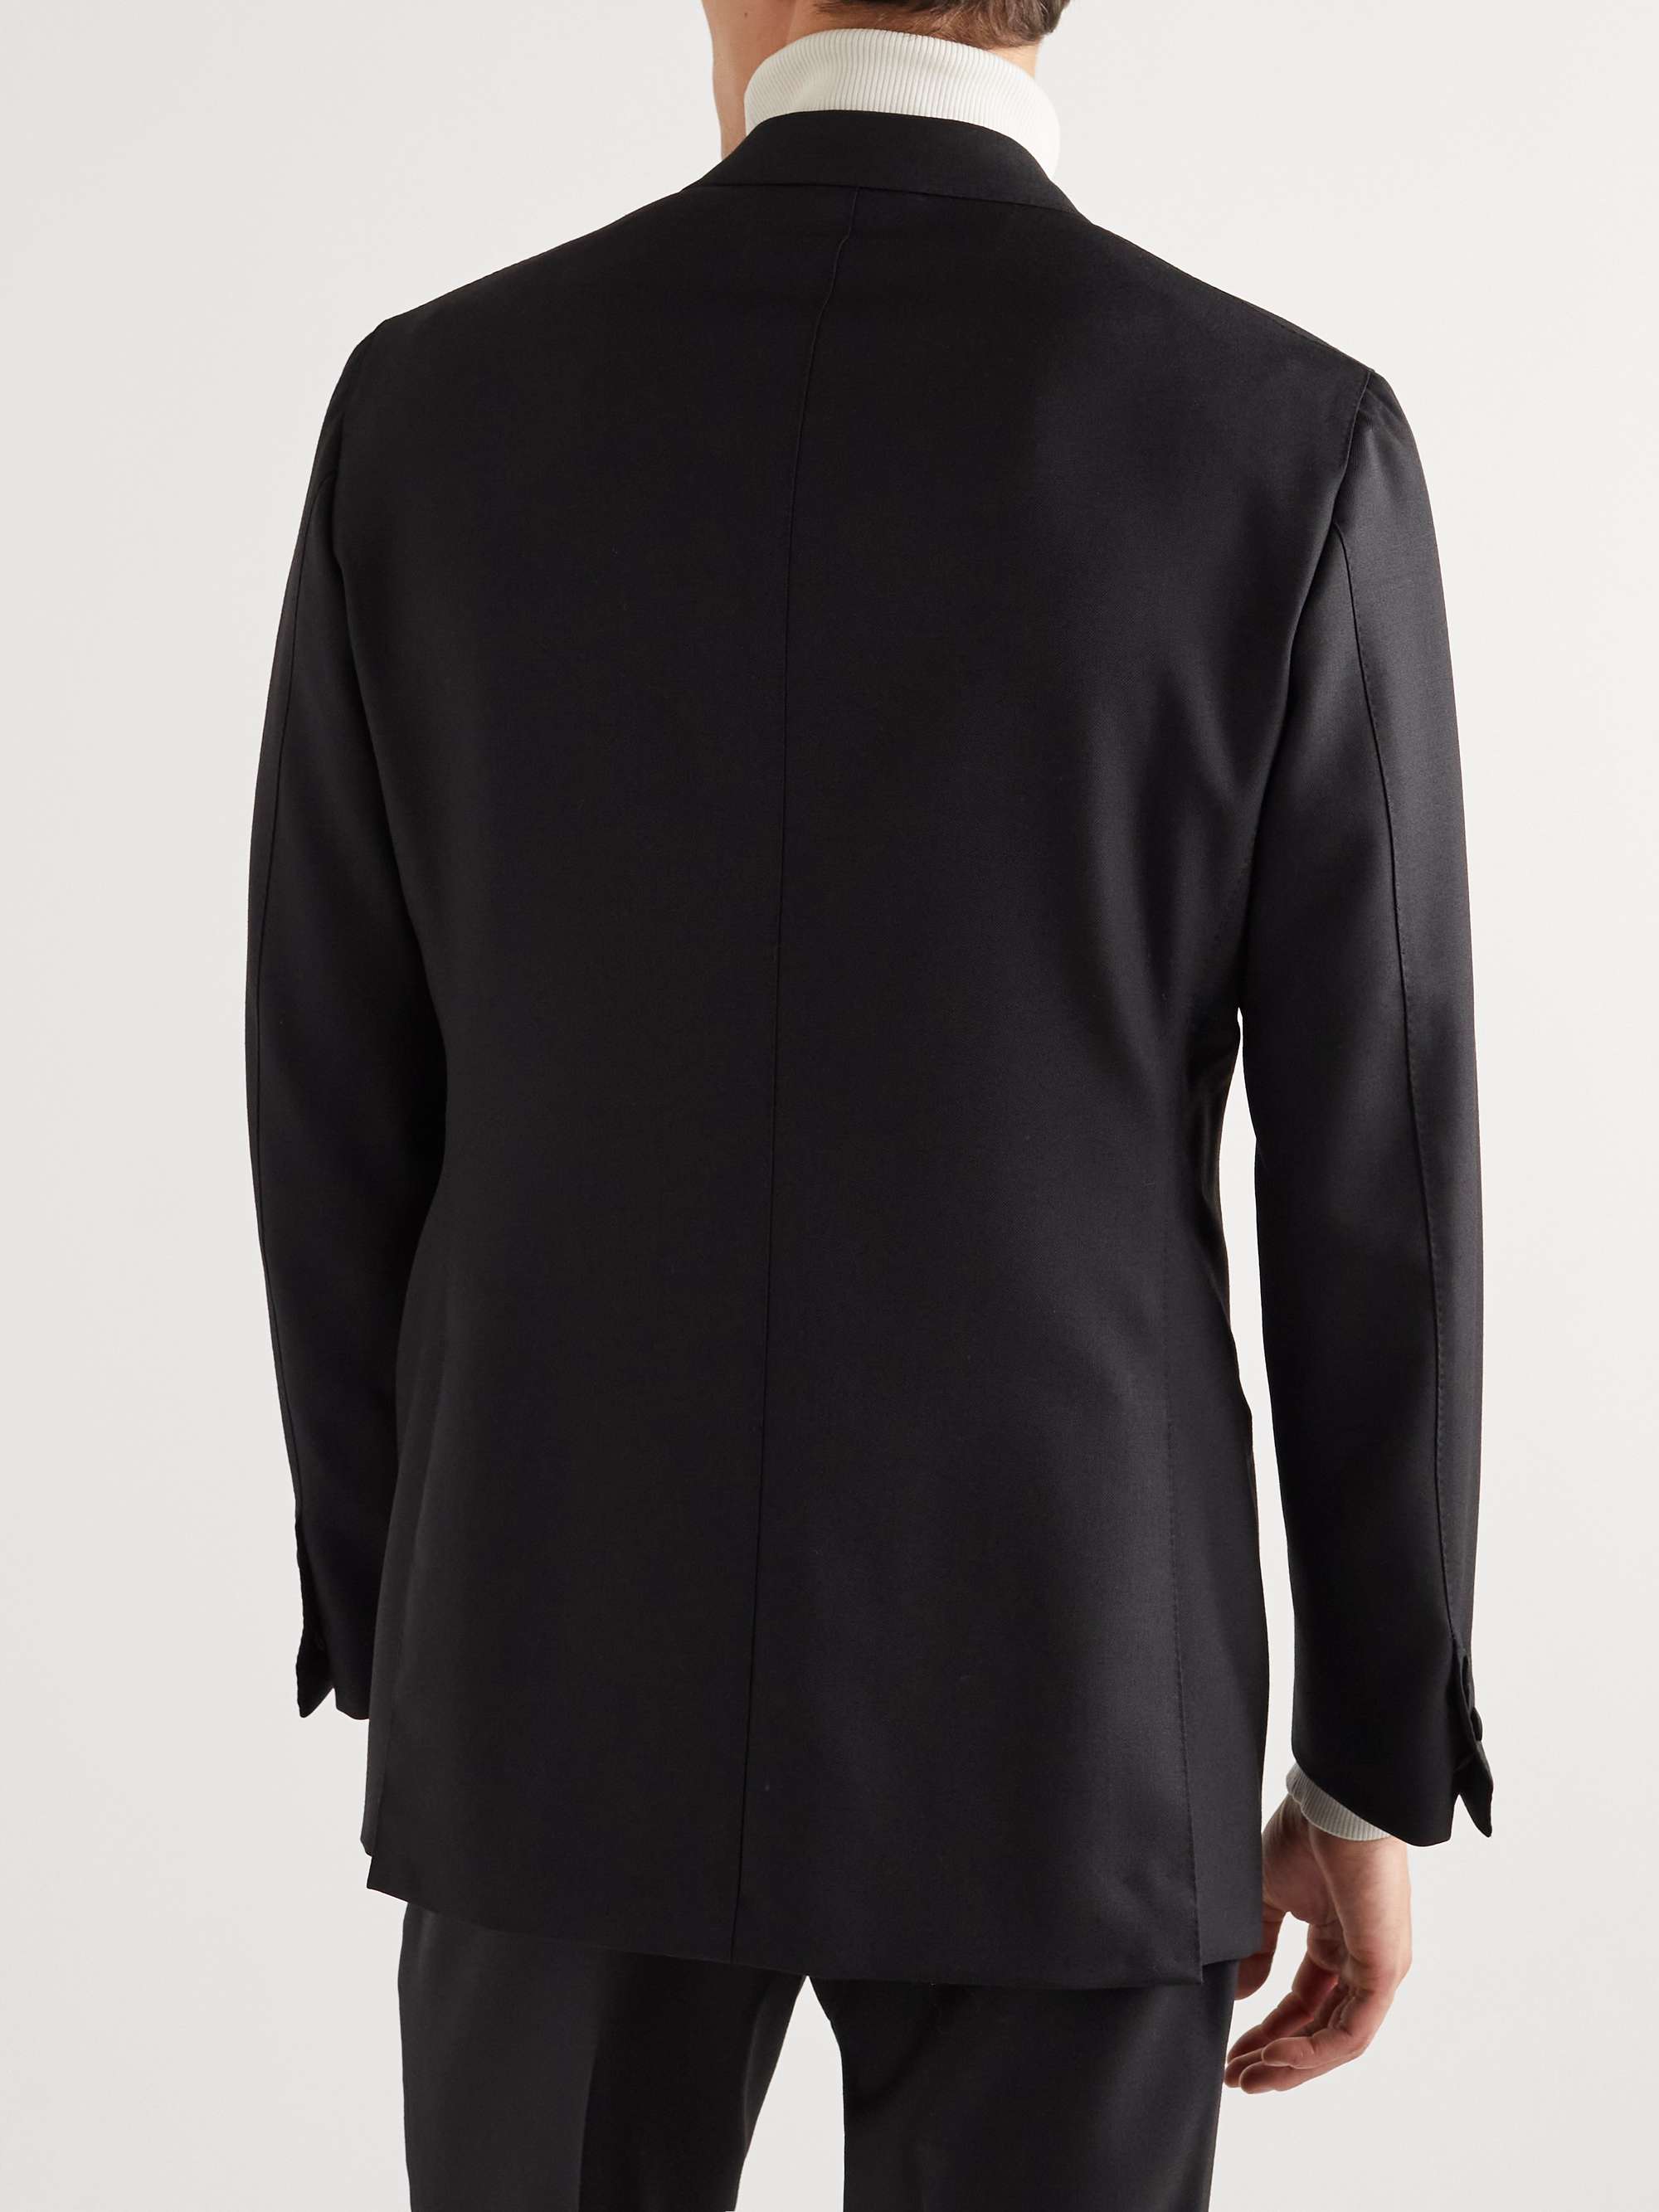 SAMAN AMEL Wool and Mohair-Blend Twill Tuxedo Jacket